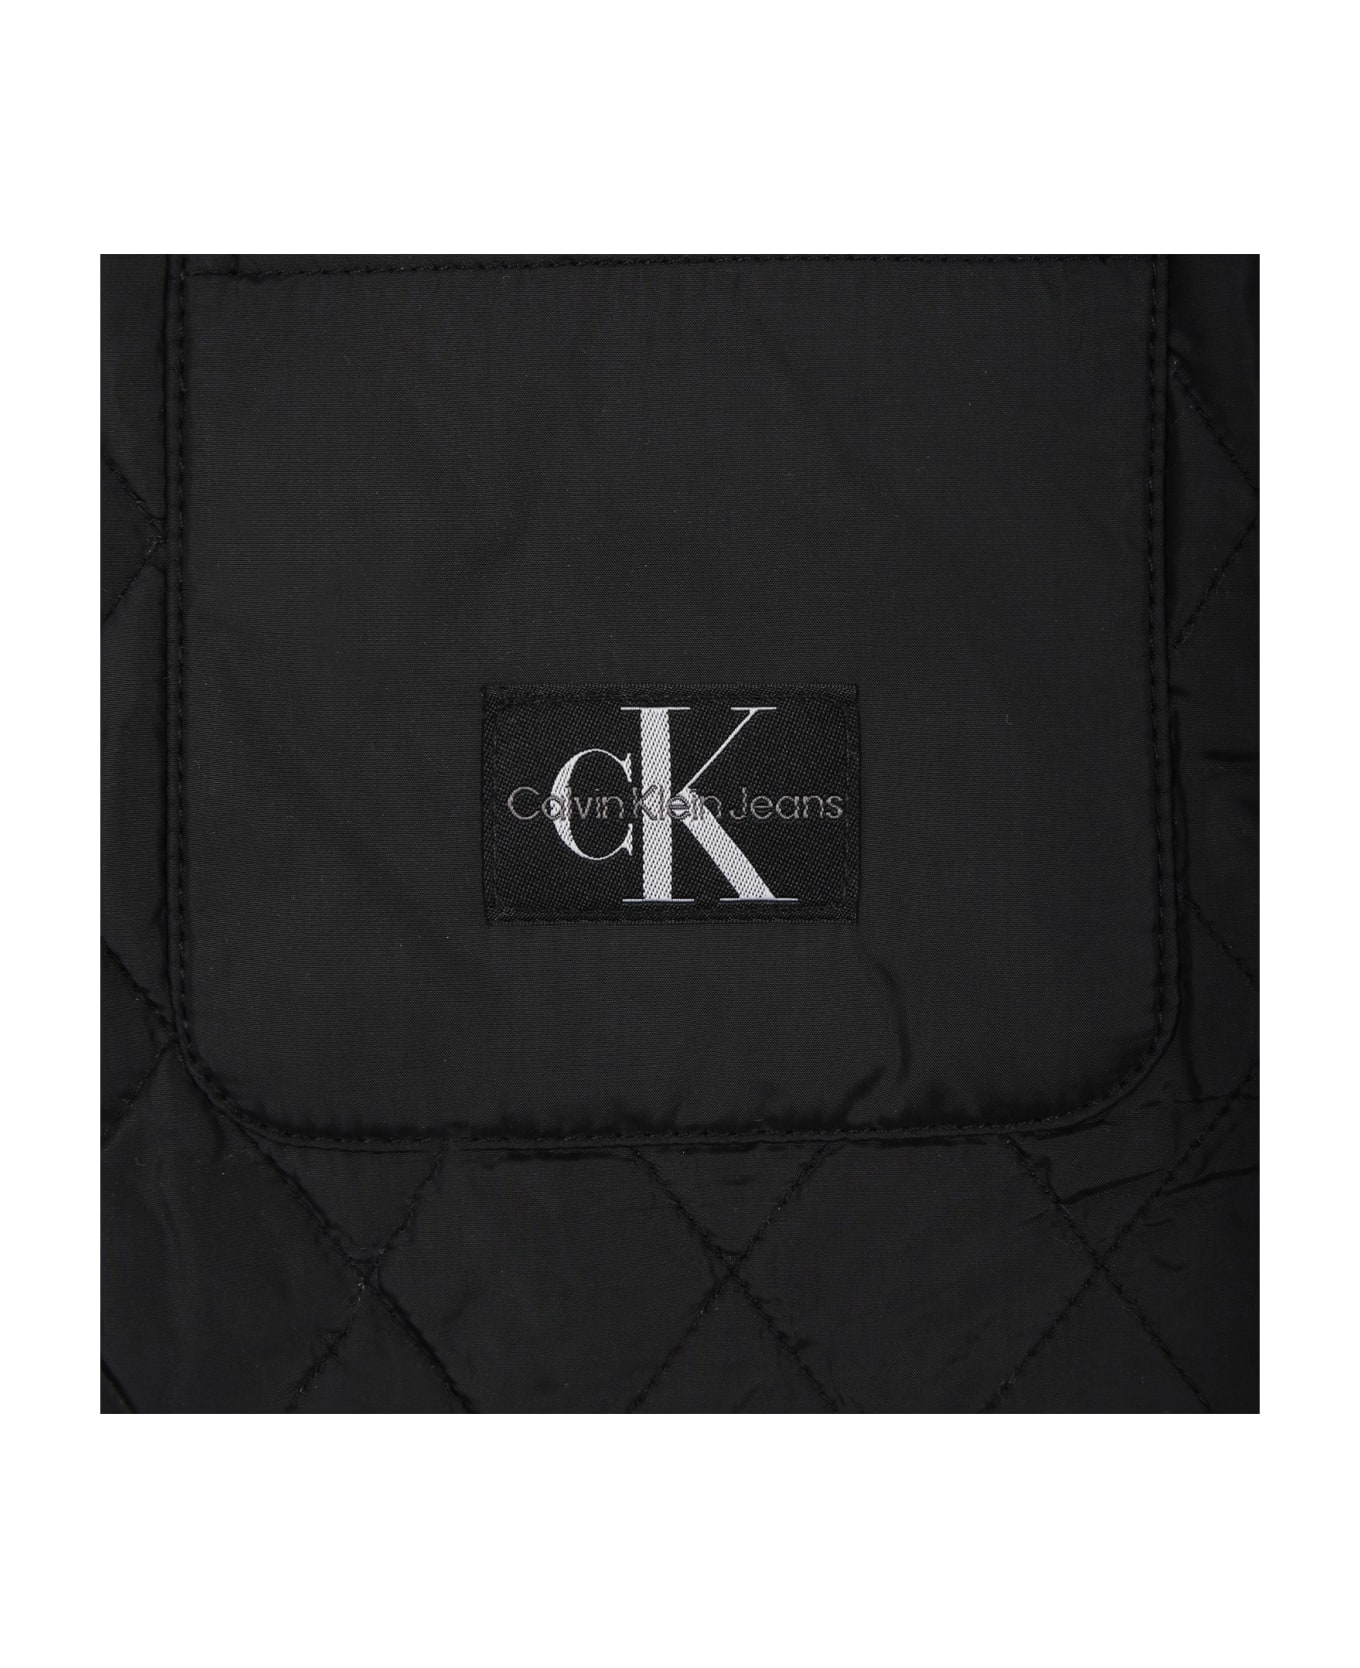 Calvin Klein Black Down Jacket For Baby Boy With Logo - Black